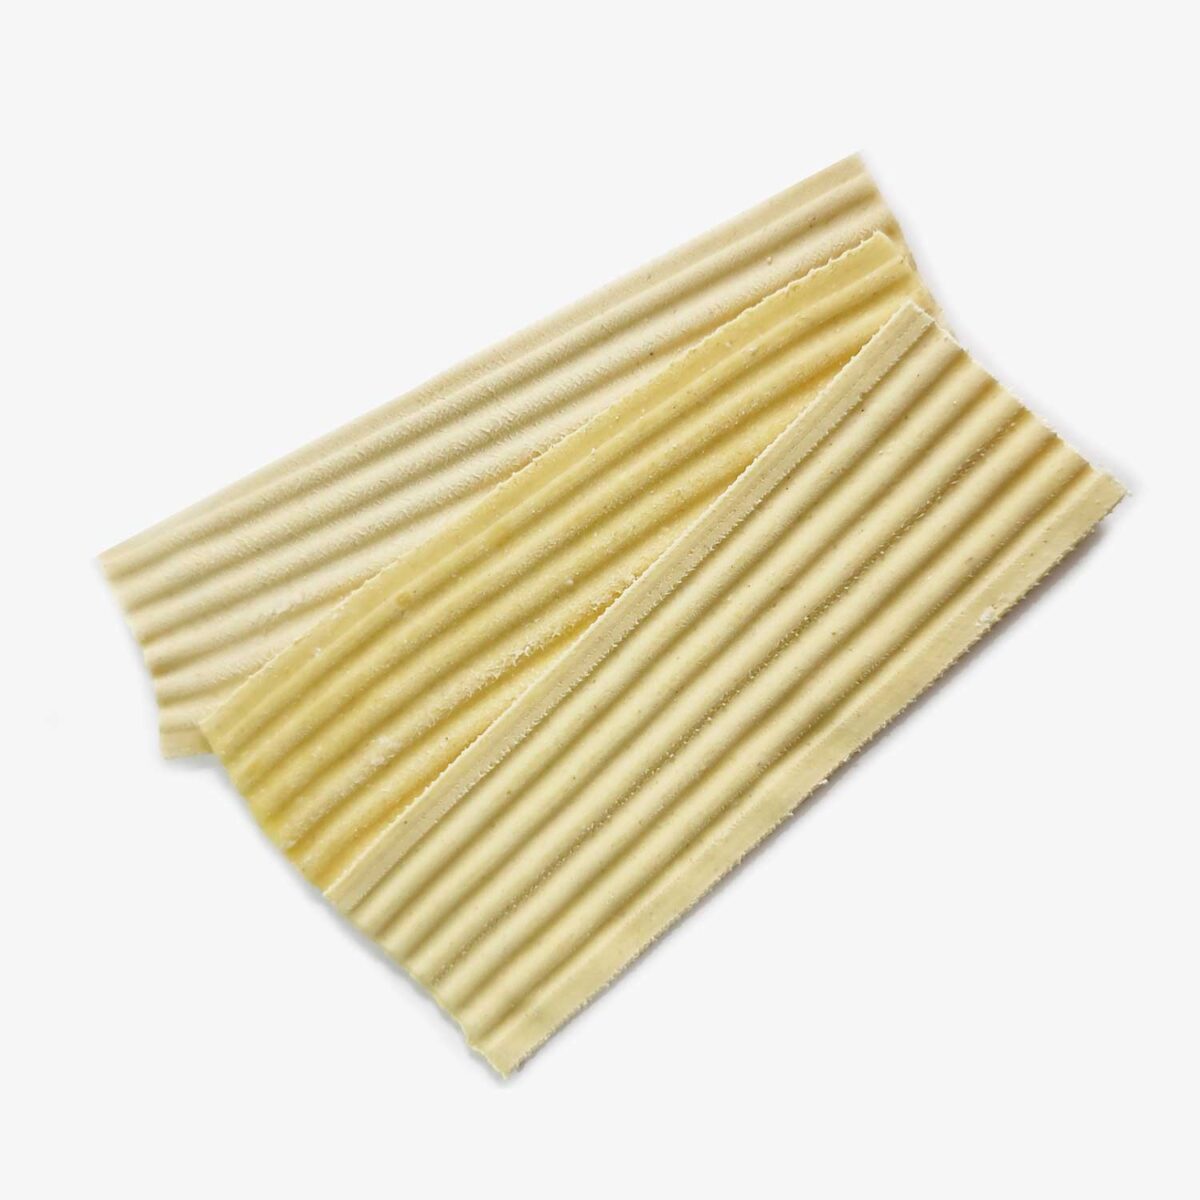 701_LASAGNA_Ondulata_Trafile-Pasta-Maker_pasta_